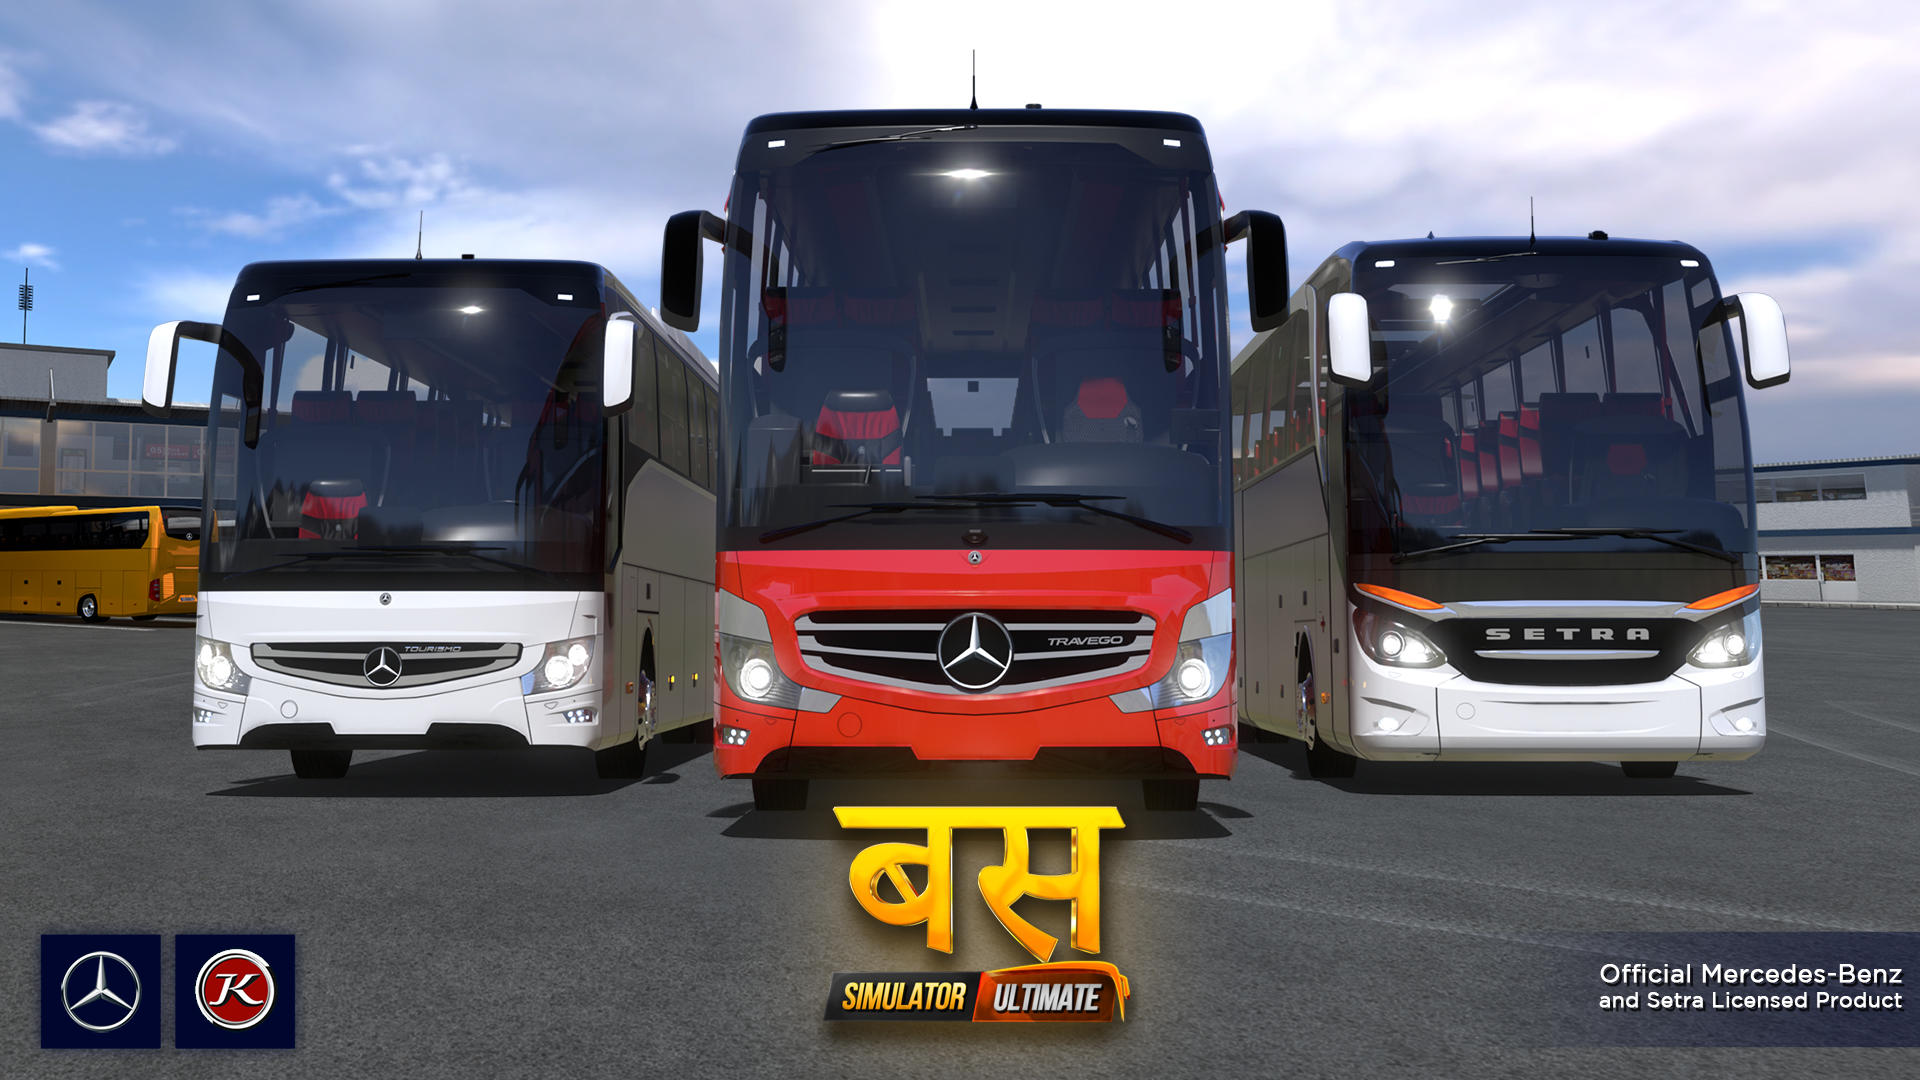 Screenshot 1 of 巴士模擬器終極版：印度 1.0.0